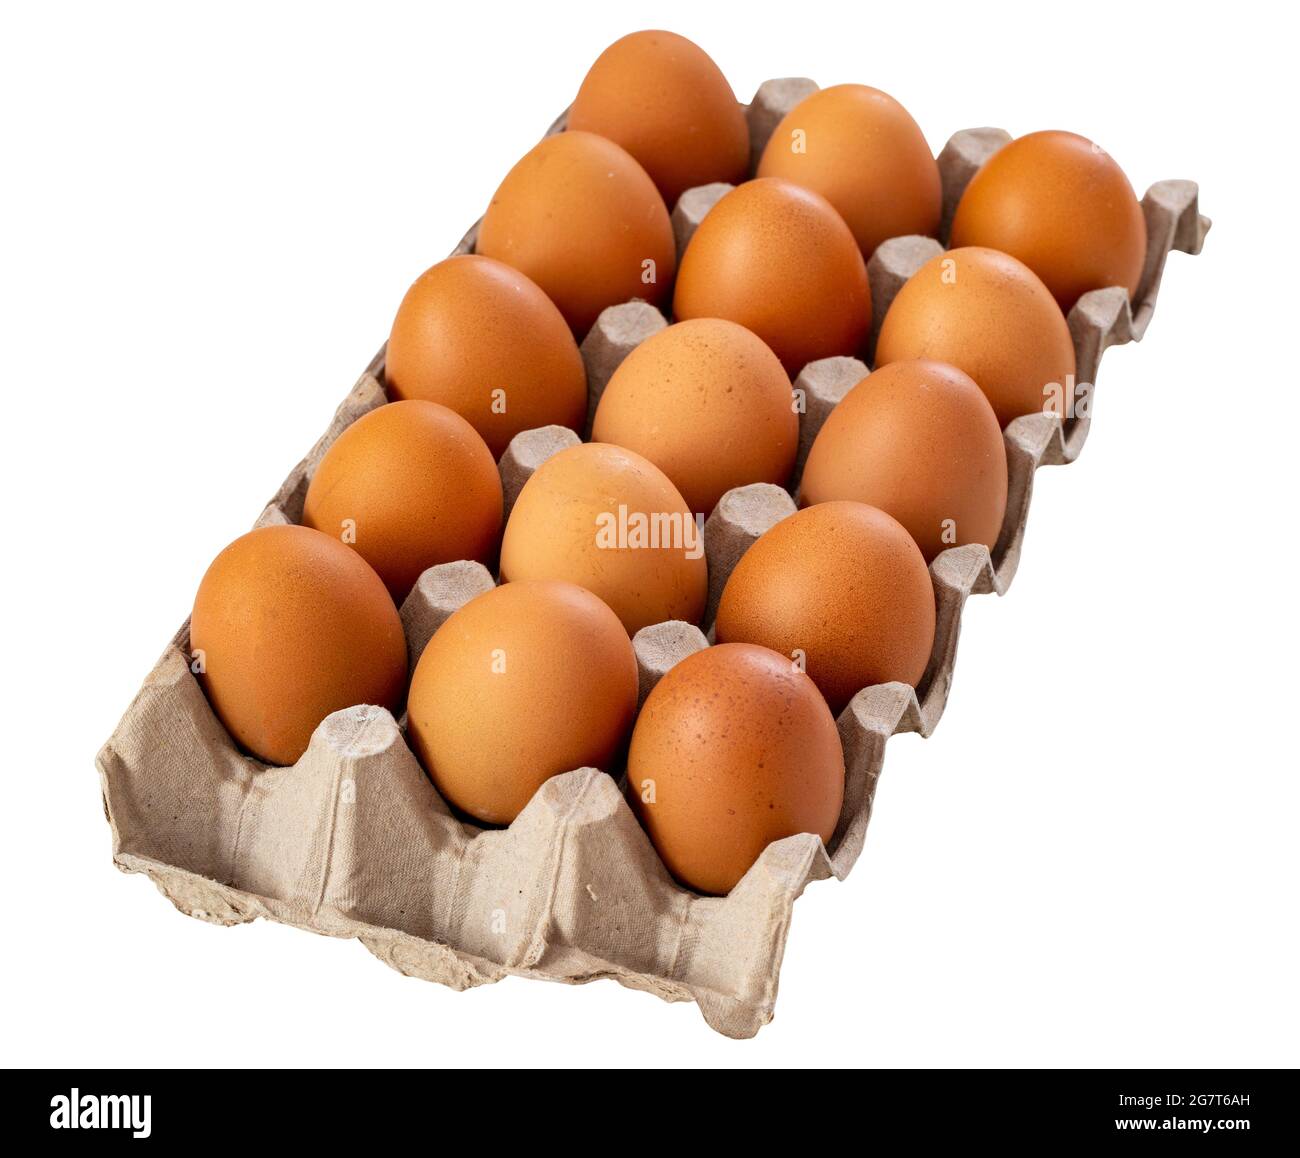 Carton egg isolated on white background. organic brown eggs. Egg boxes Stock Photo